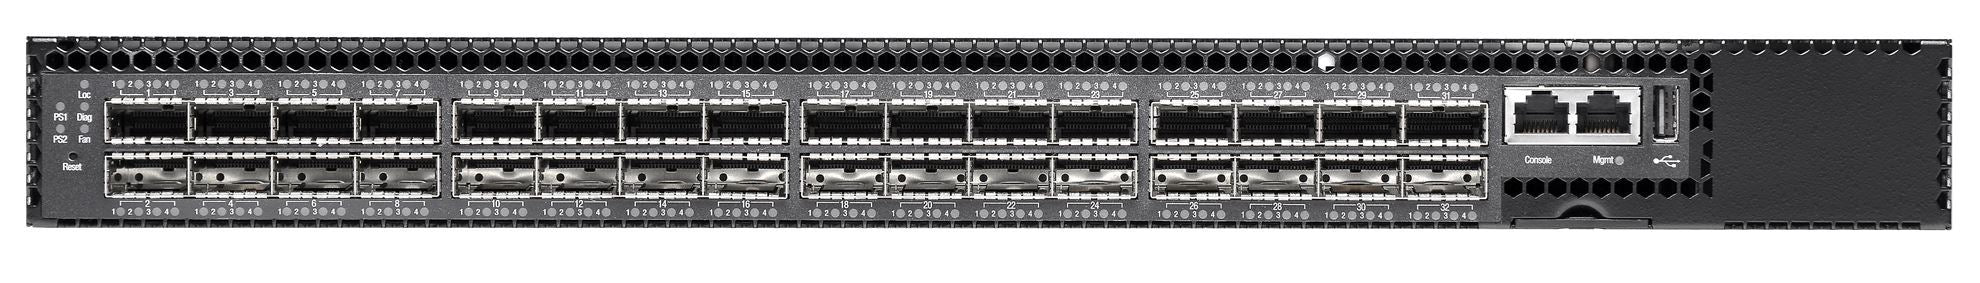 EDGECORE 32 Port (32x 40G) QSFP+ compact 1RU Switch. Broadcom Trident II+ 1.28Tb